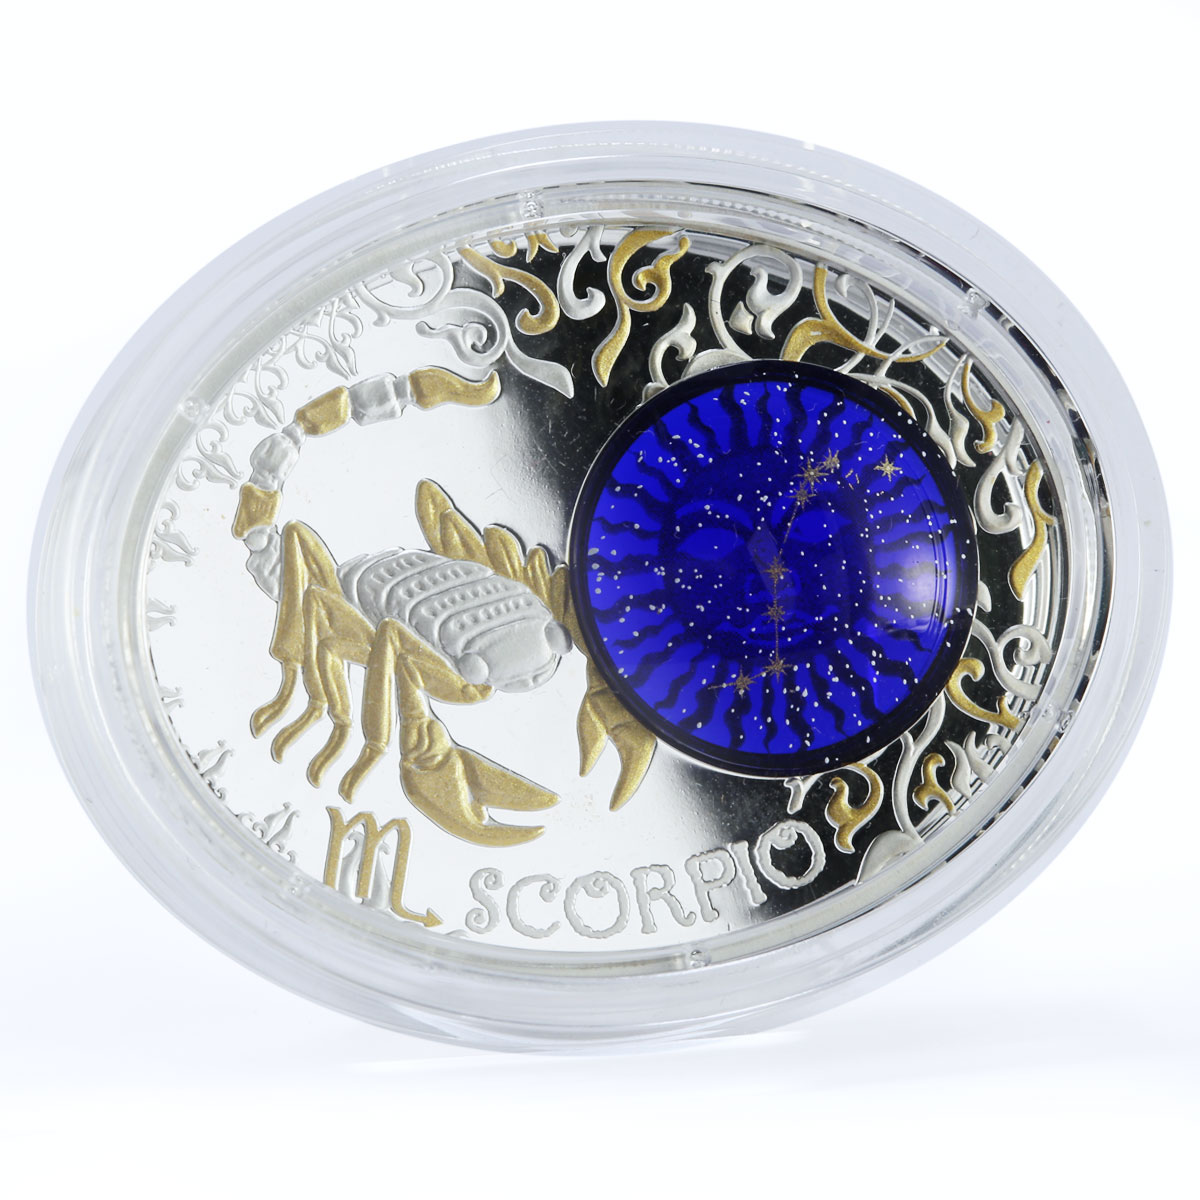 Macedonia 10 denari Zodiac Signs series Scorpio 3D silver coin 2014